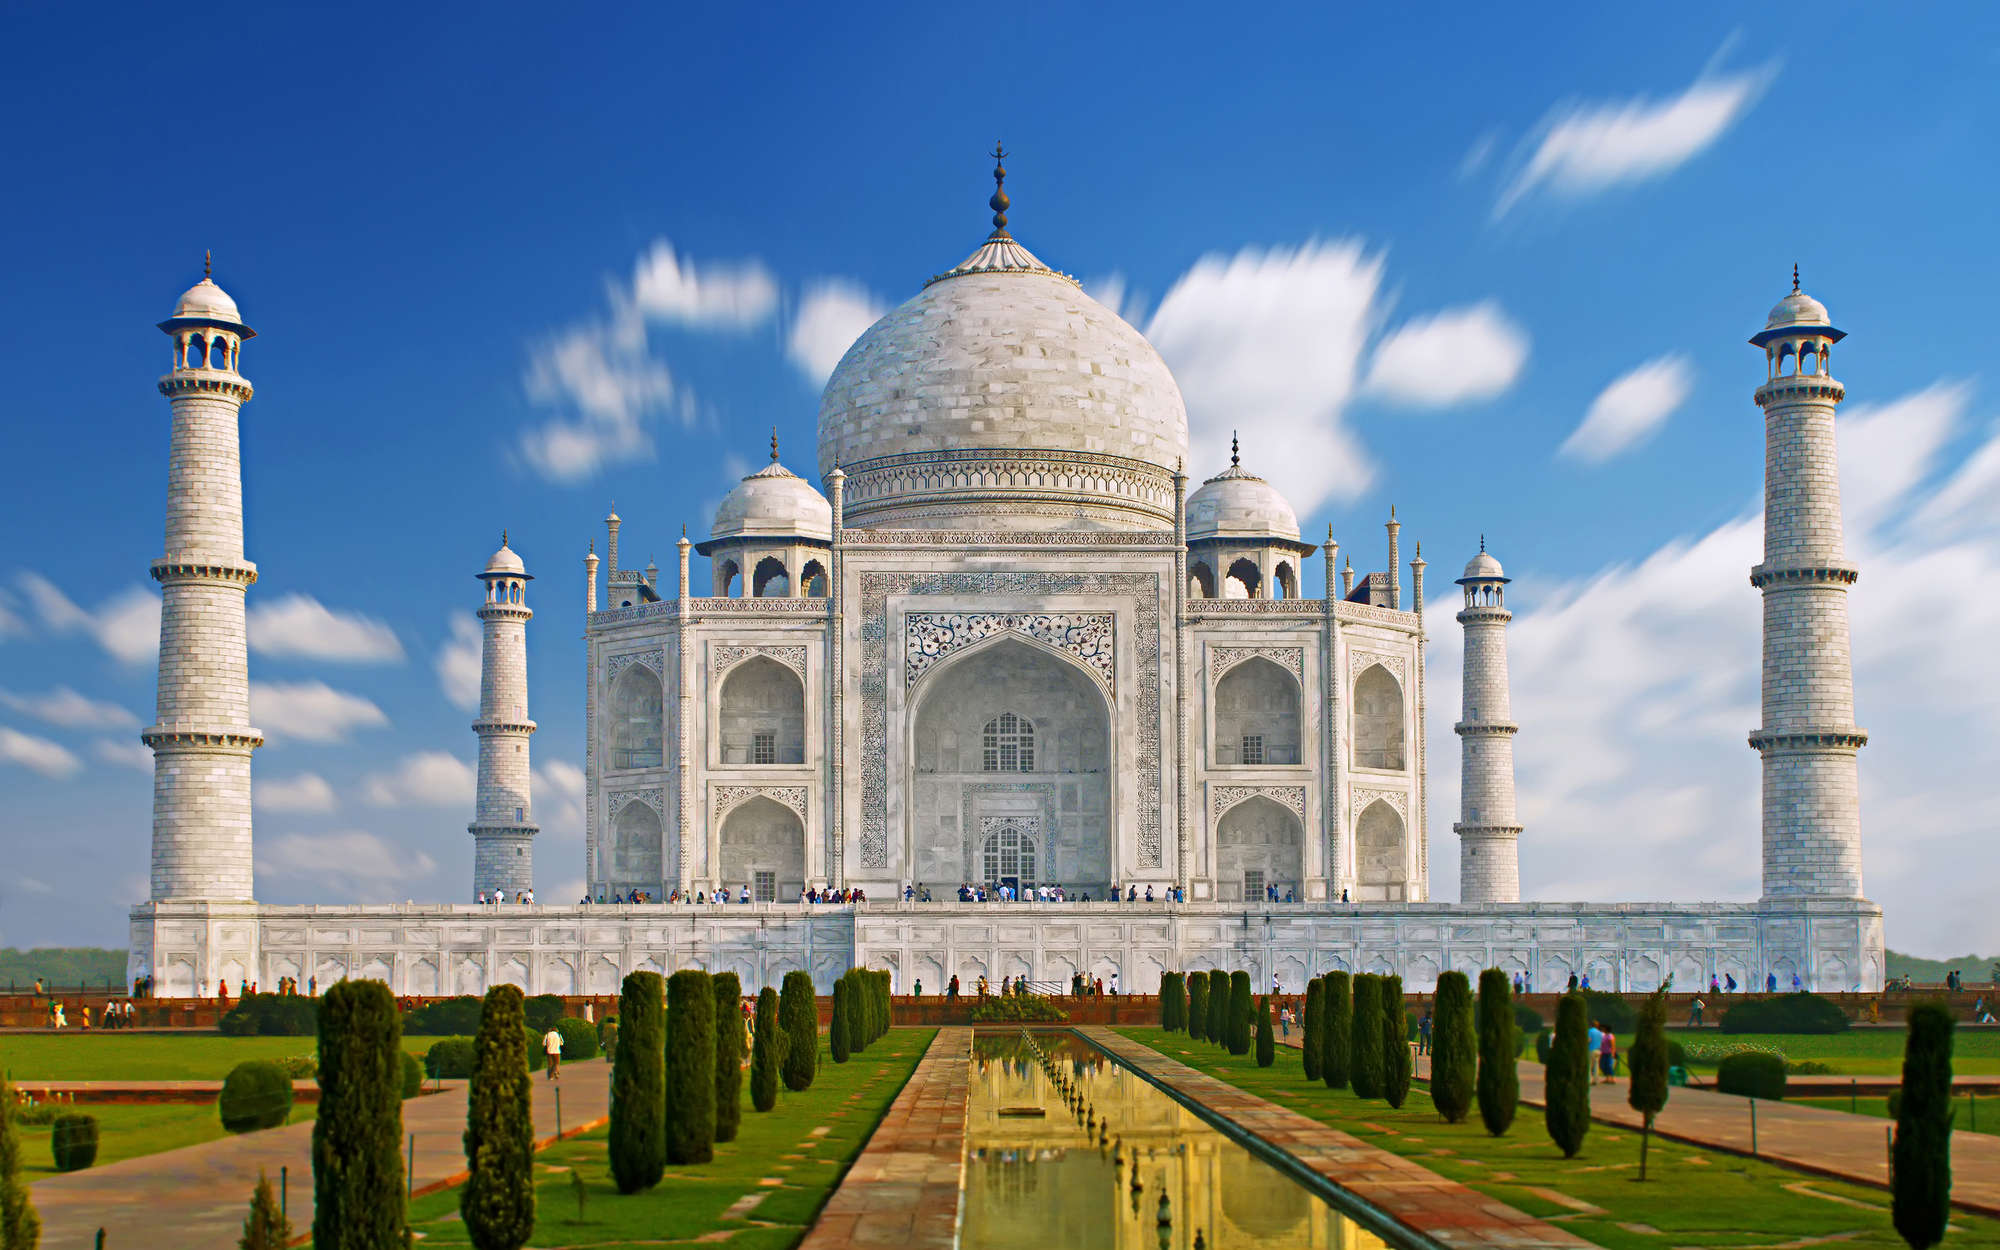             Wandschildering Taj Mahal in Turkije - parelmoer glad vlies
        